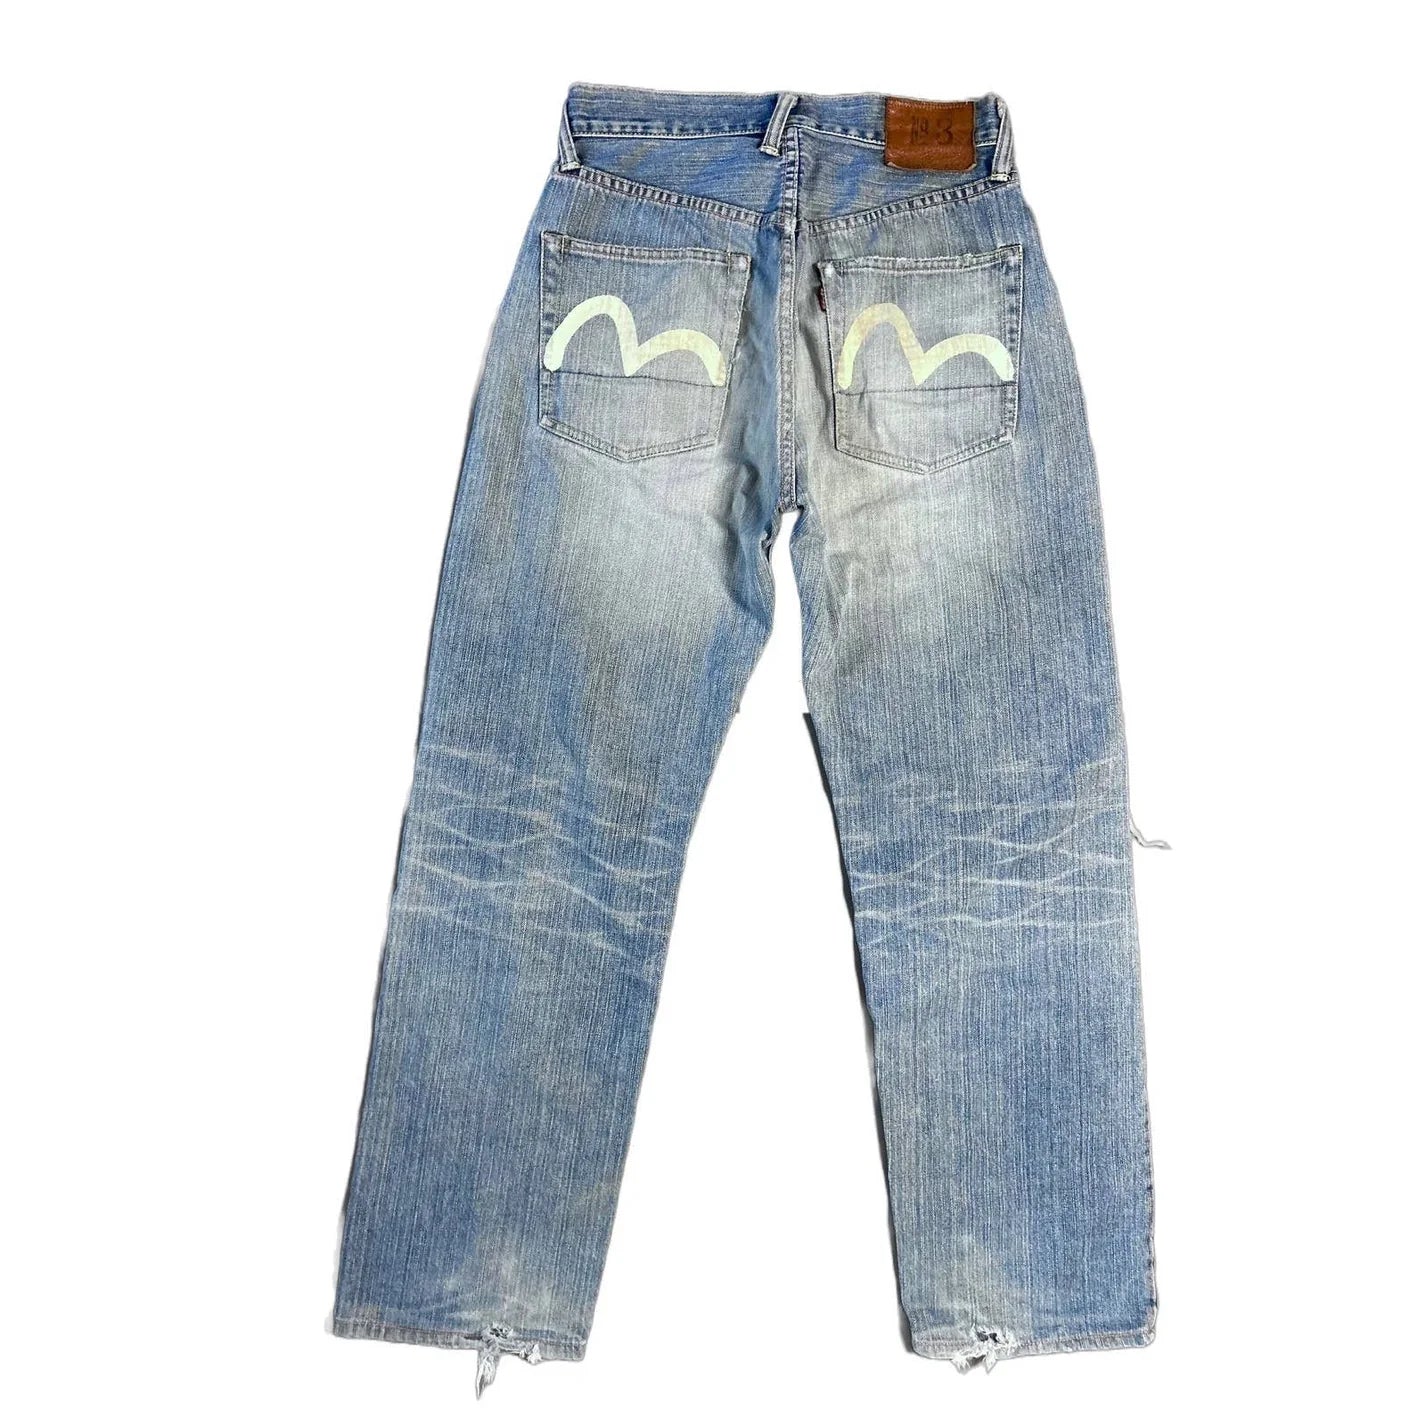 Evisu Jeans Vintage Japanese Denim Pants Seagulls Baby Blue Lodz Polska tyl